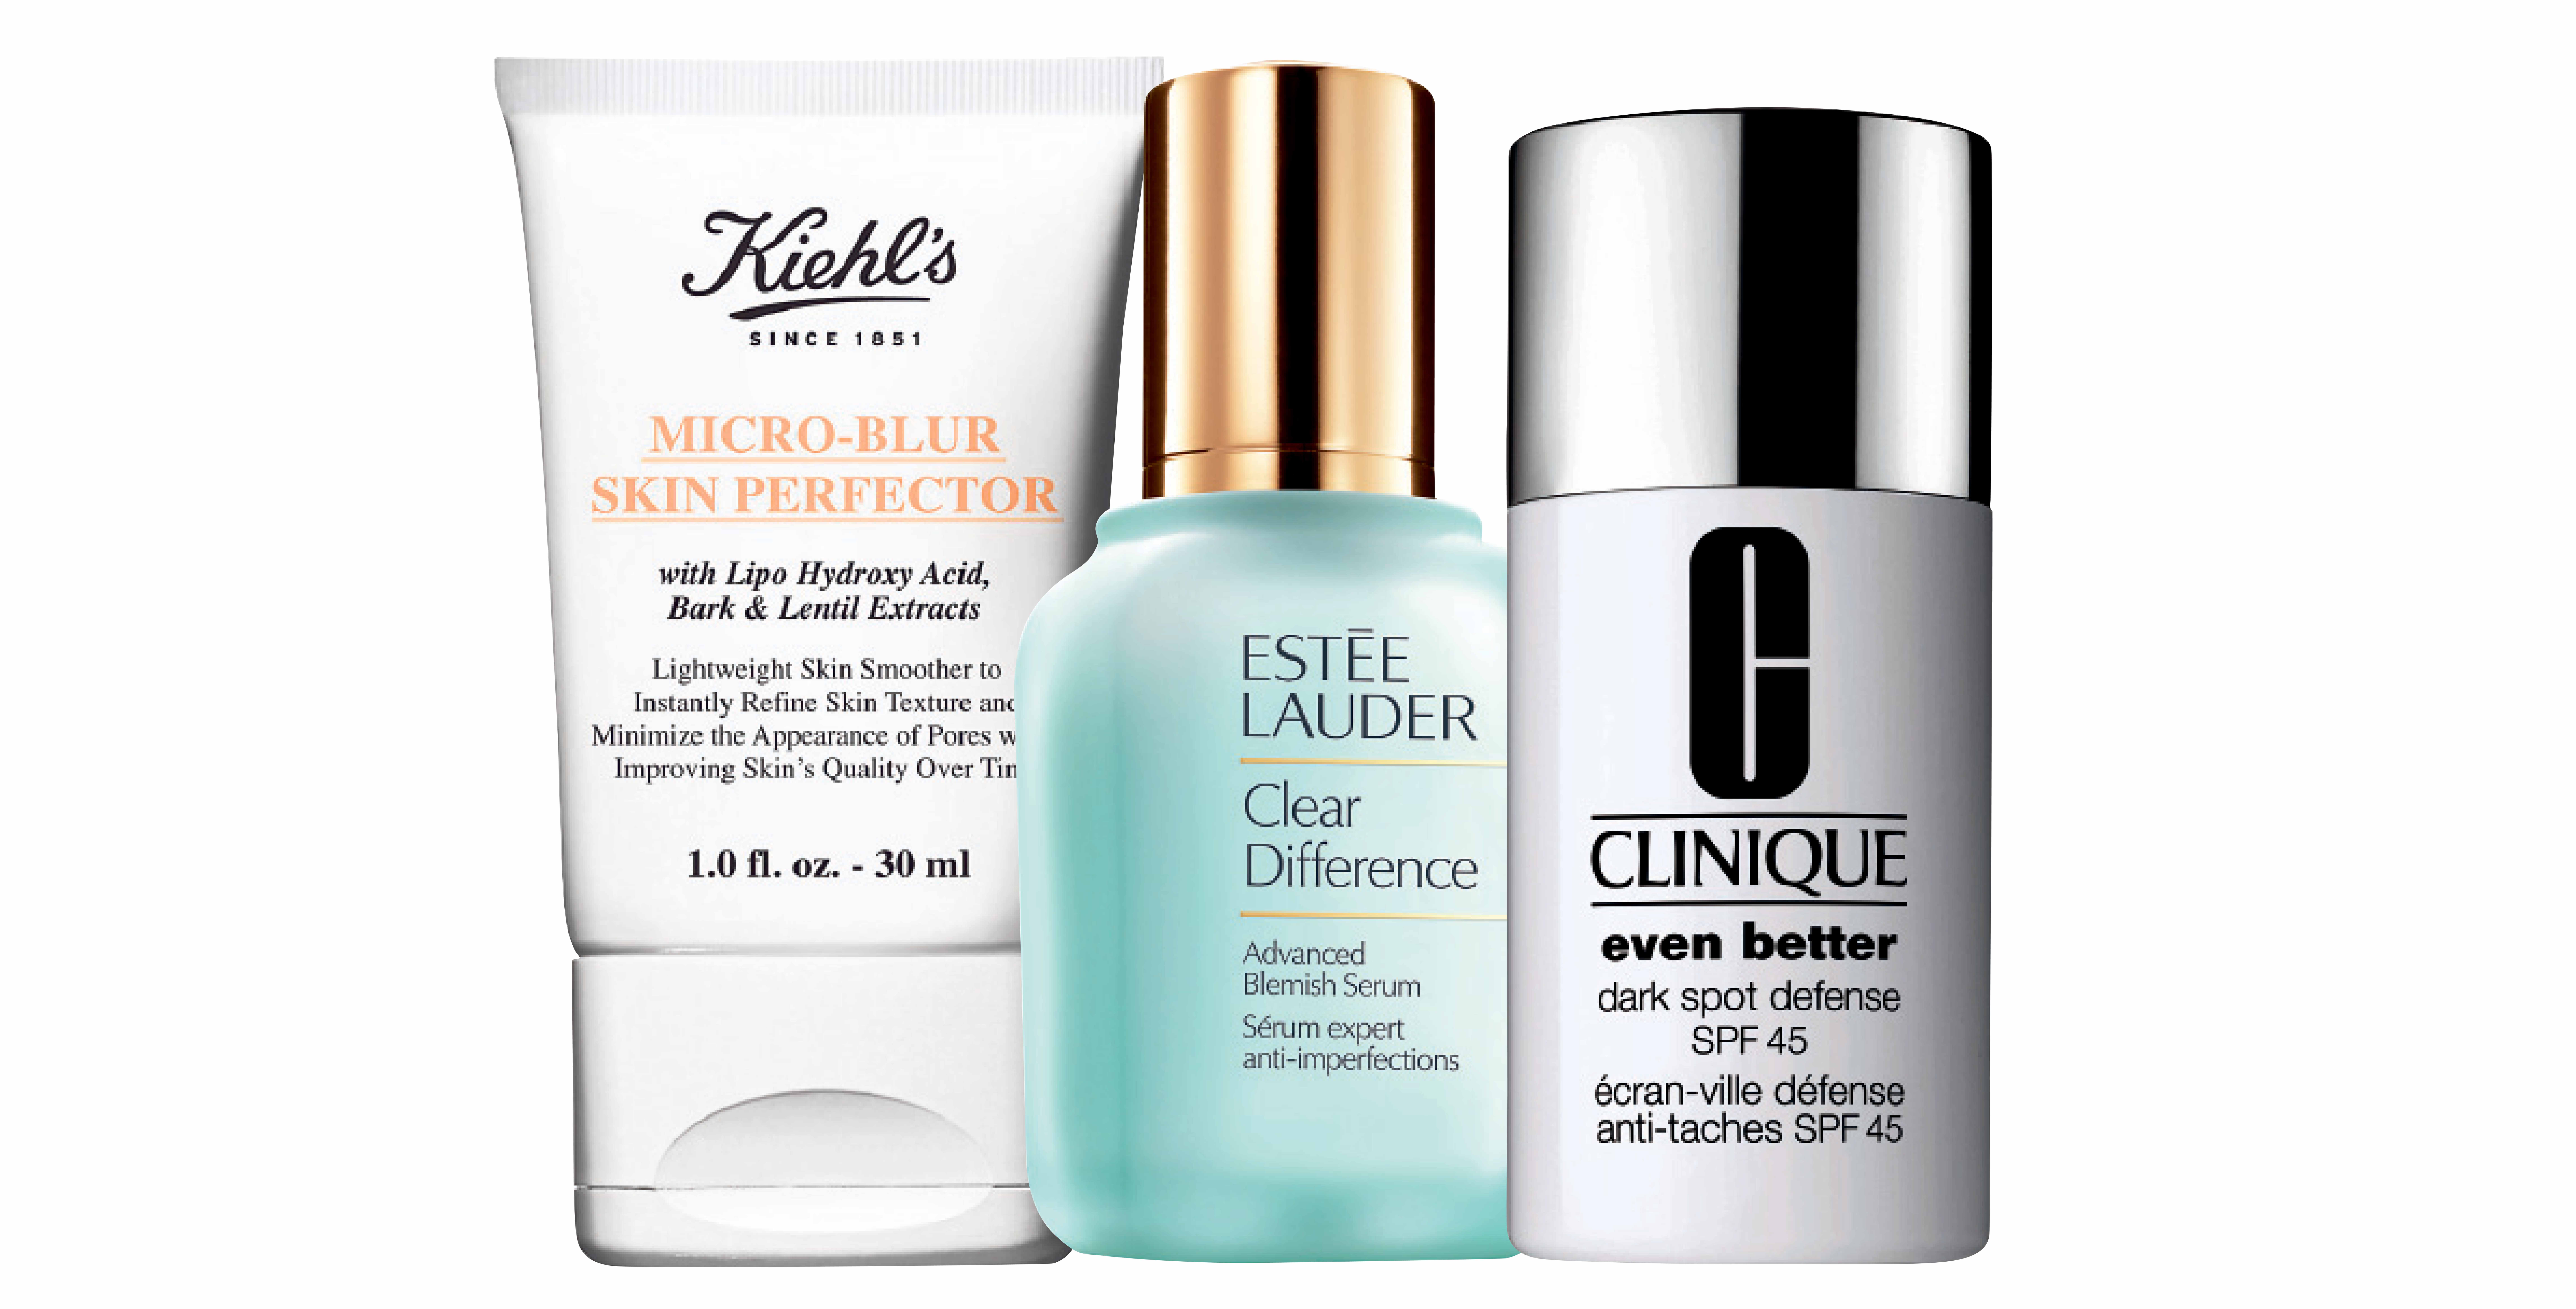 Kiehl's Micro-Blur Skin Perfector; Estee Lauder Clear Difference Advanced Blemish Serum; Clinique Even Better Dark Spot Defense SPF45.